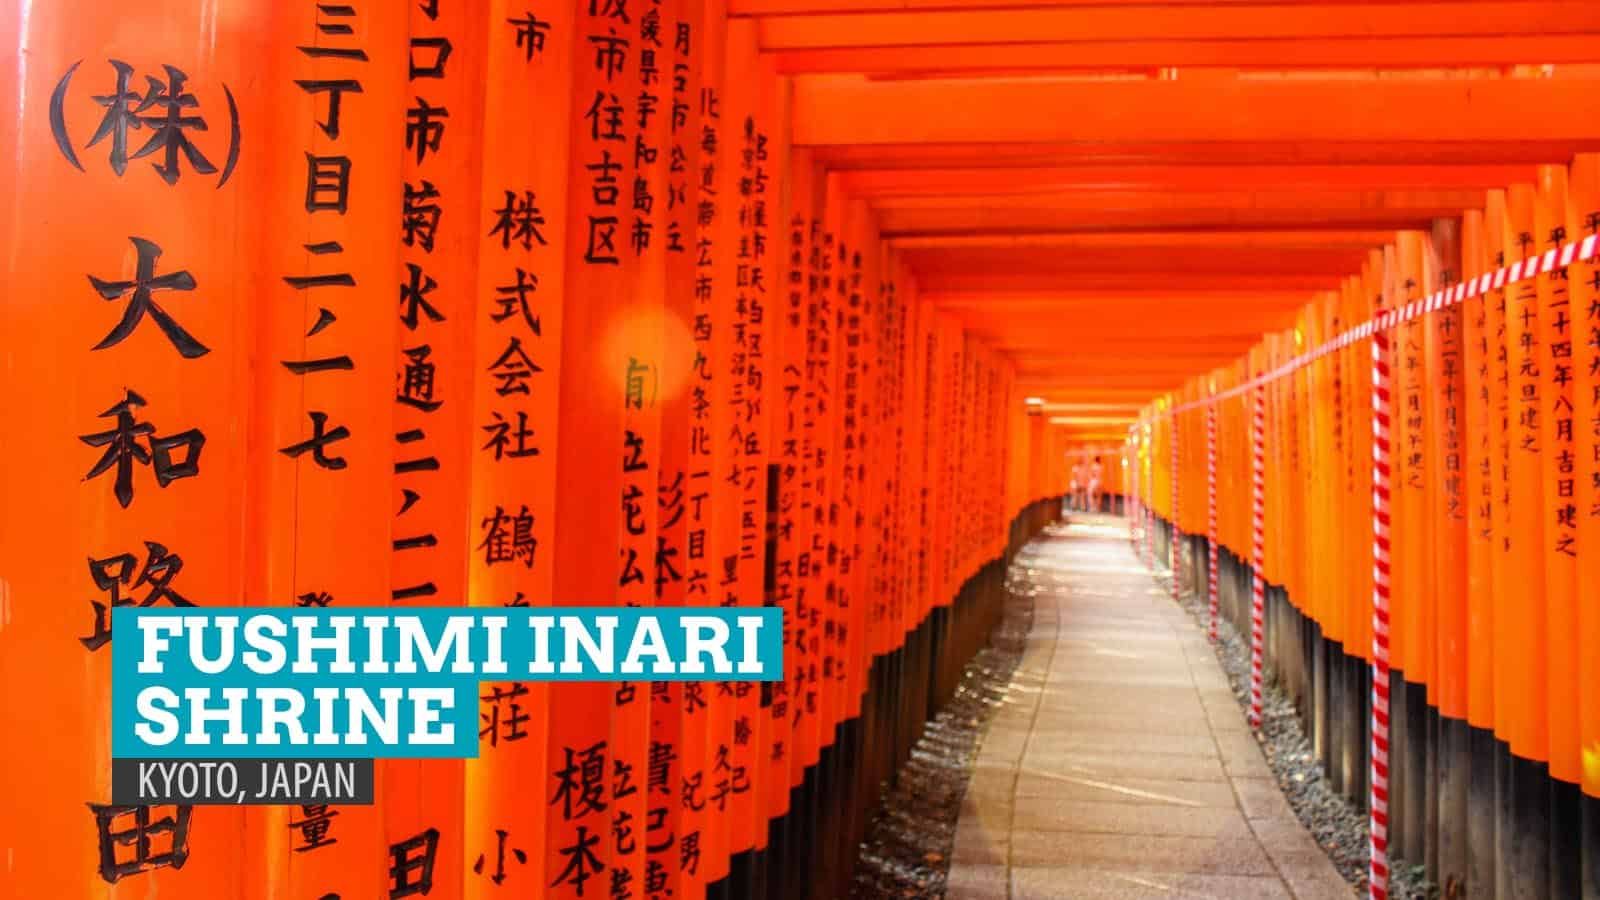 FUSHIMI INARI SHRINE: The Thousand Torii Gates of Kyoto, Japan